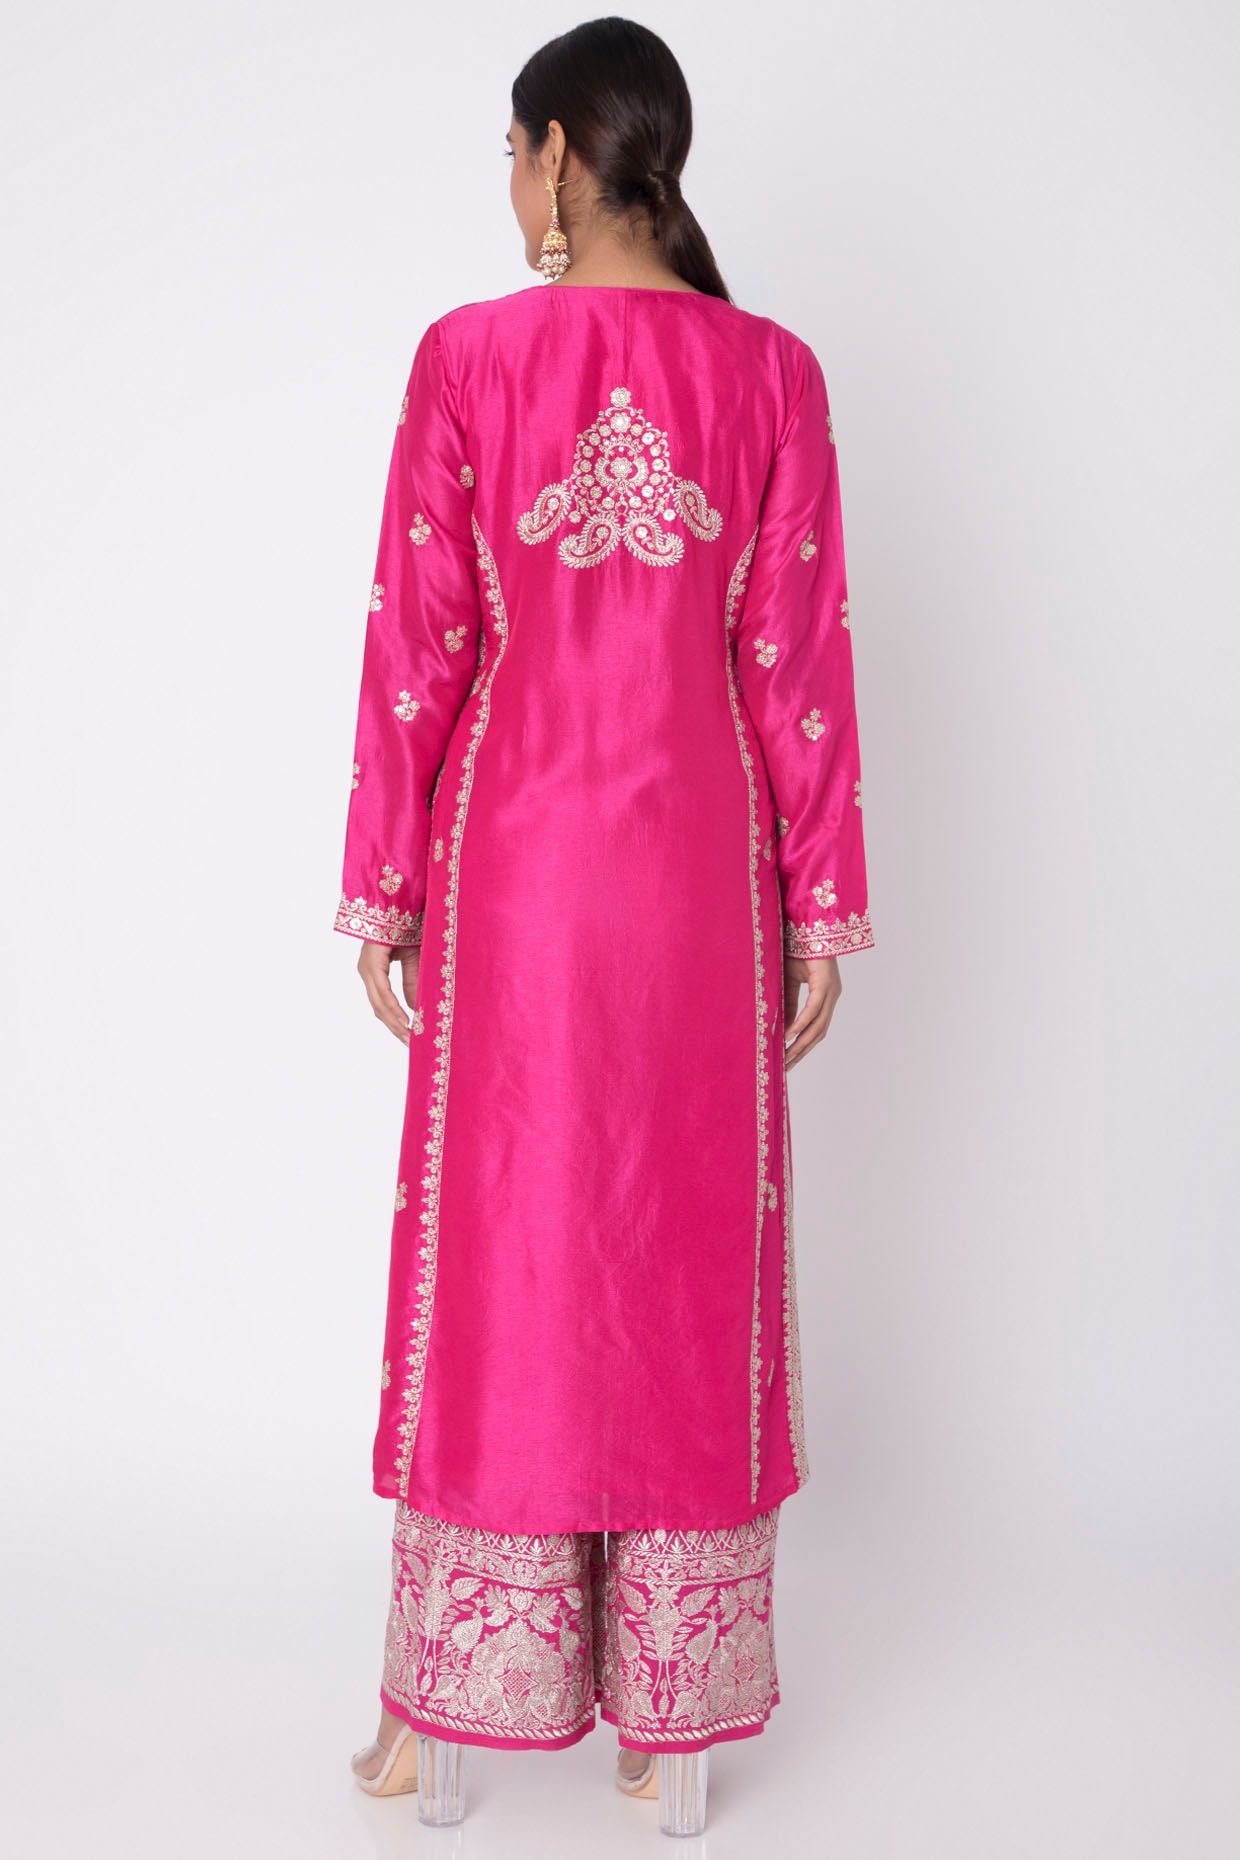 Get Rani Pink Floral Printed Double Layer Kurta at ₹ 1299 | LBB Shop